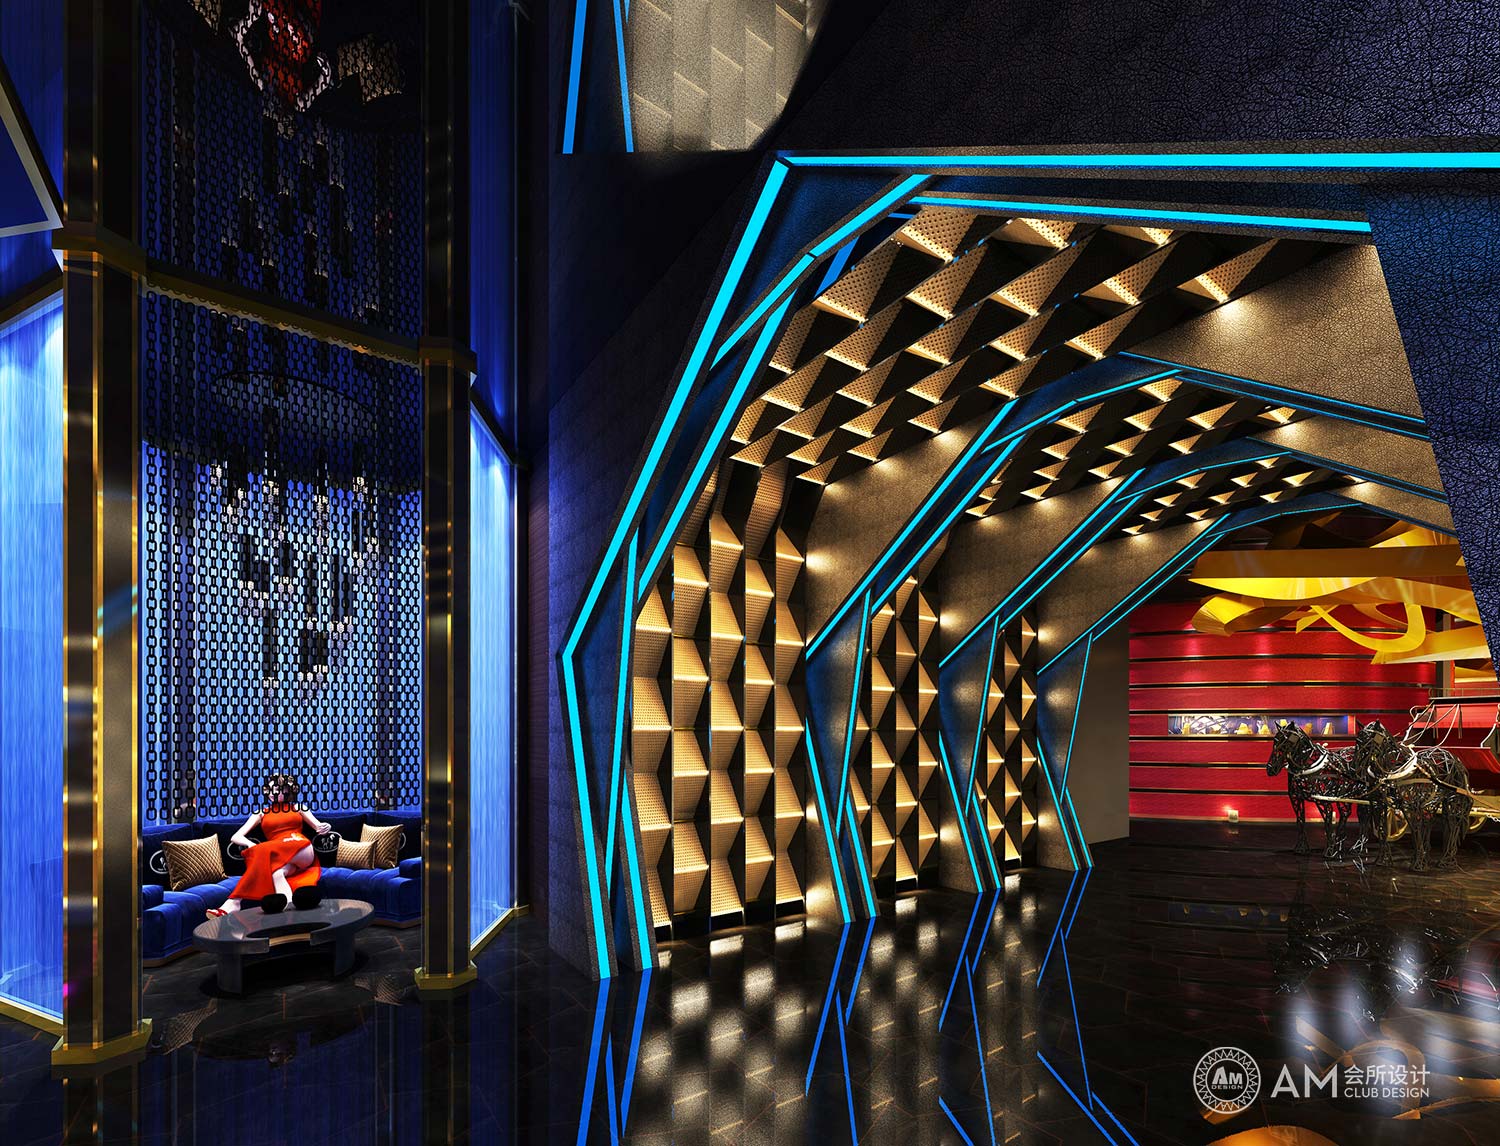 AM DESIGN | Corridor design of Top Spa Club in Tianjun No.7